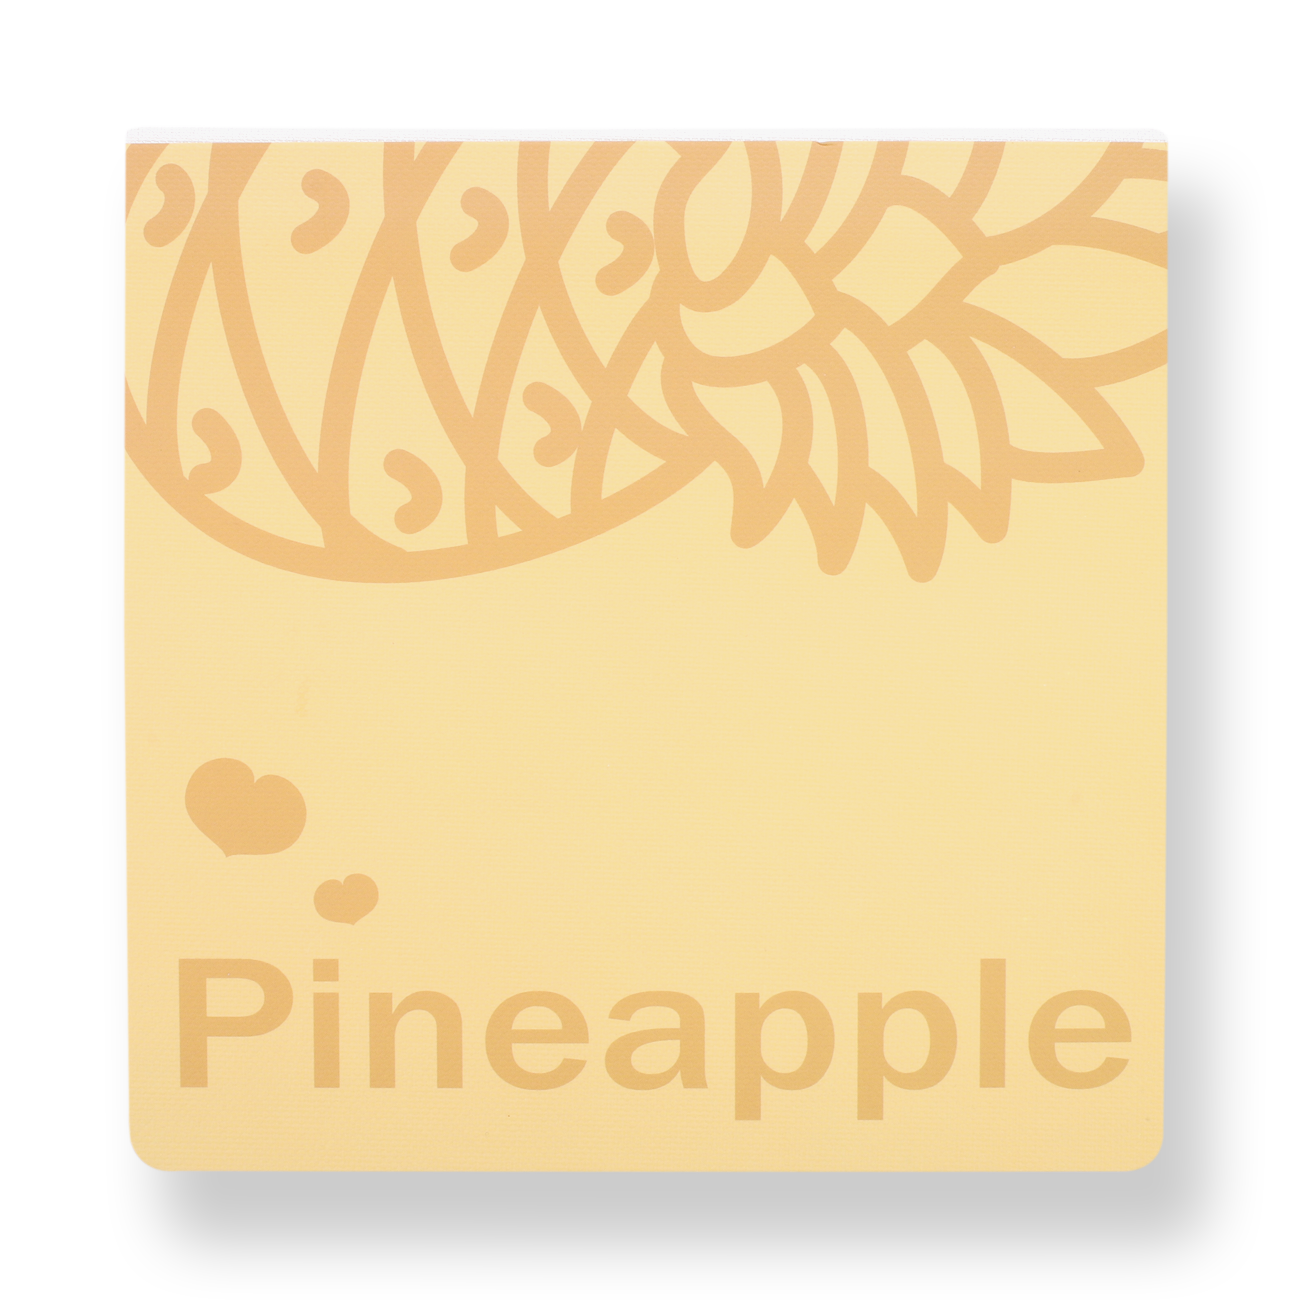 Minimalist Fruit Notebook - Pineapple - Stationery Pal